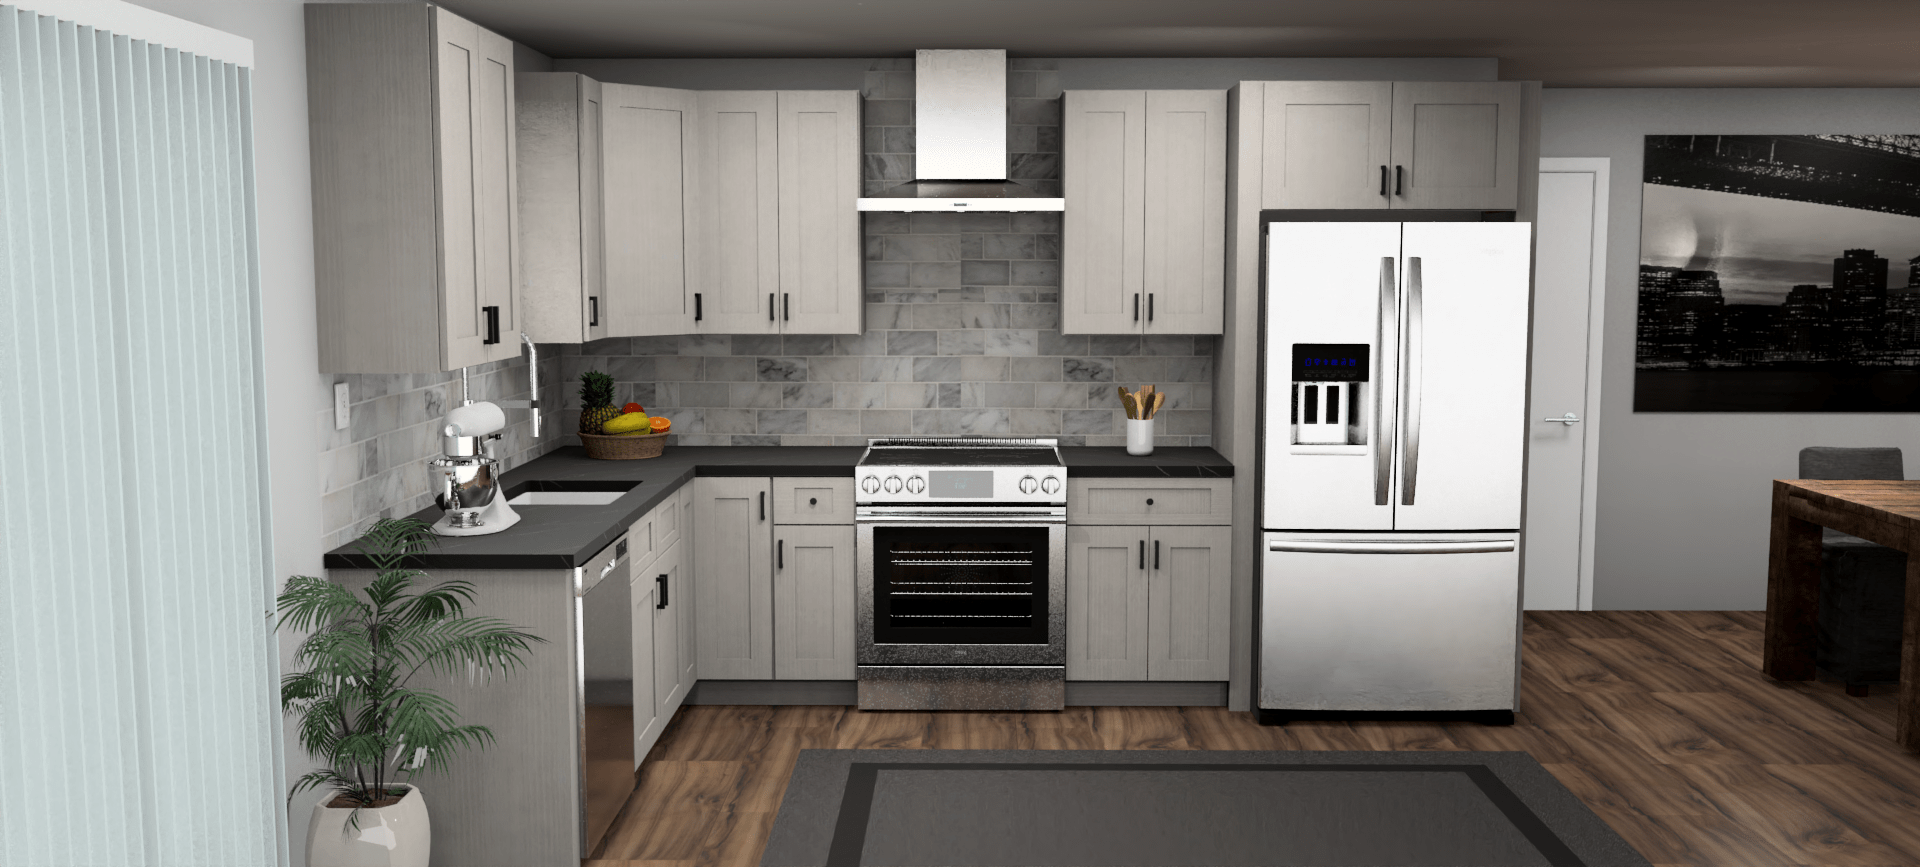 Fabuwood Allure Onyx Horizon 8 x 12 L Shaped Kitchen Front Layout Photo